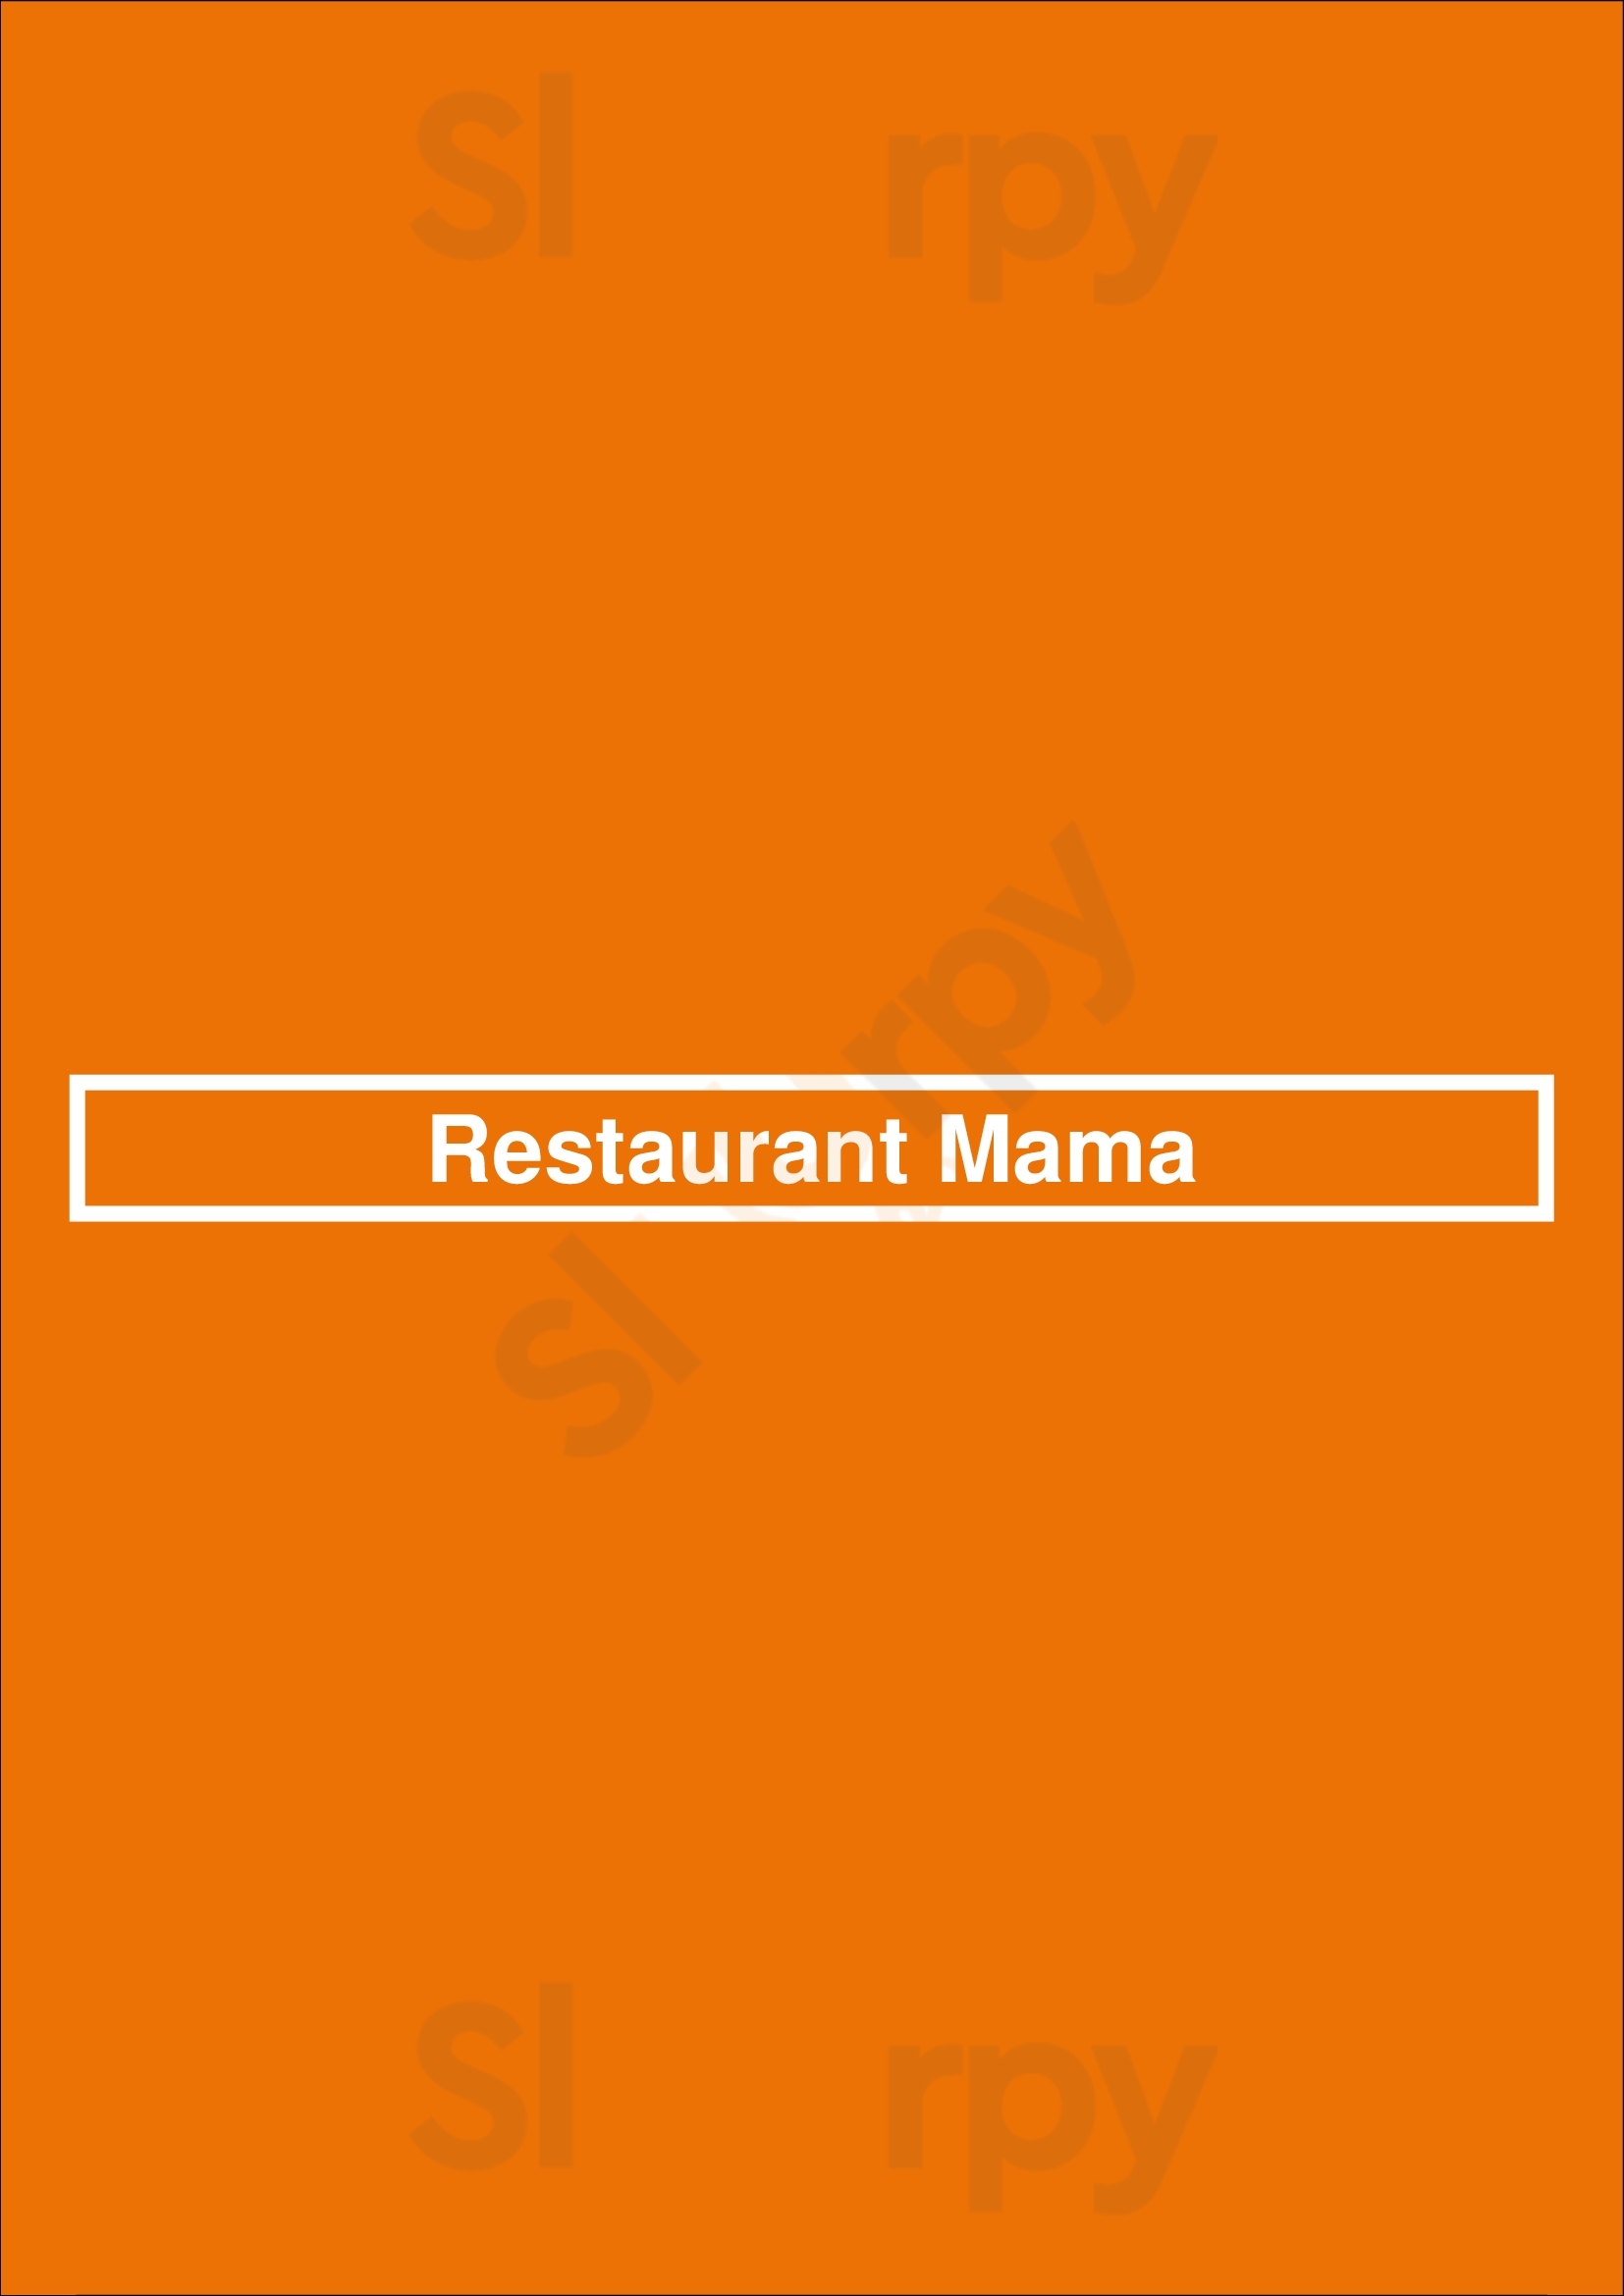 Restaurant Mama Wormerveer Menu - 1